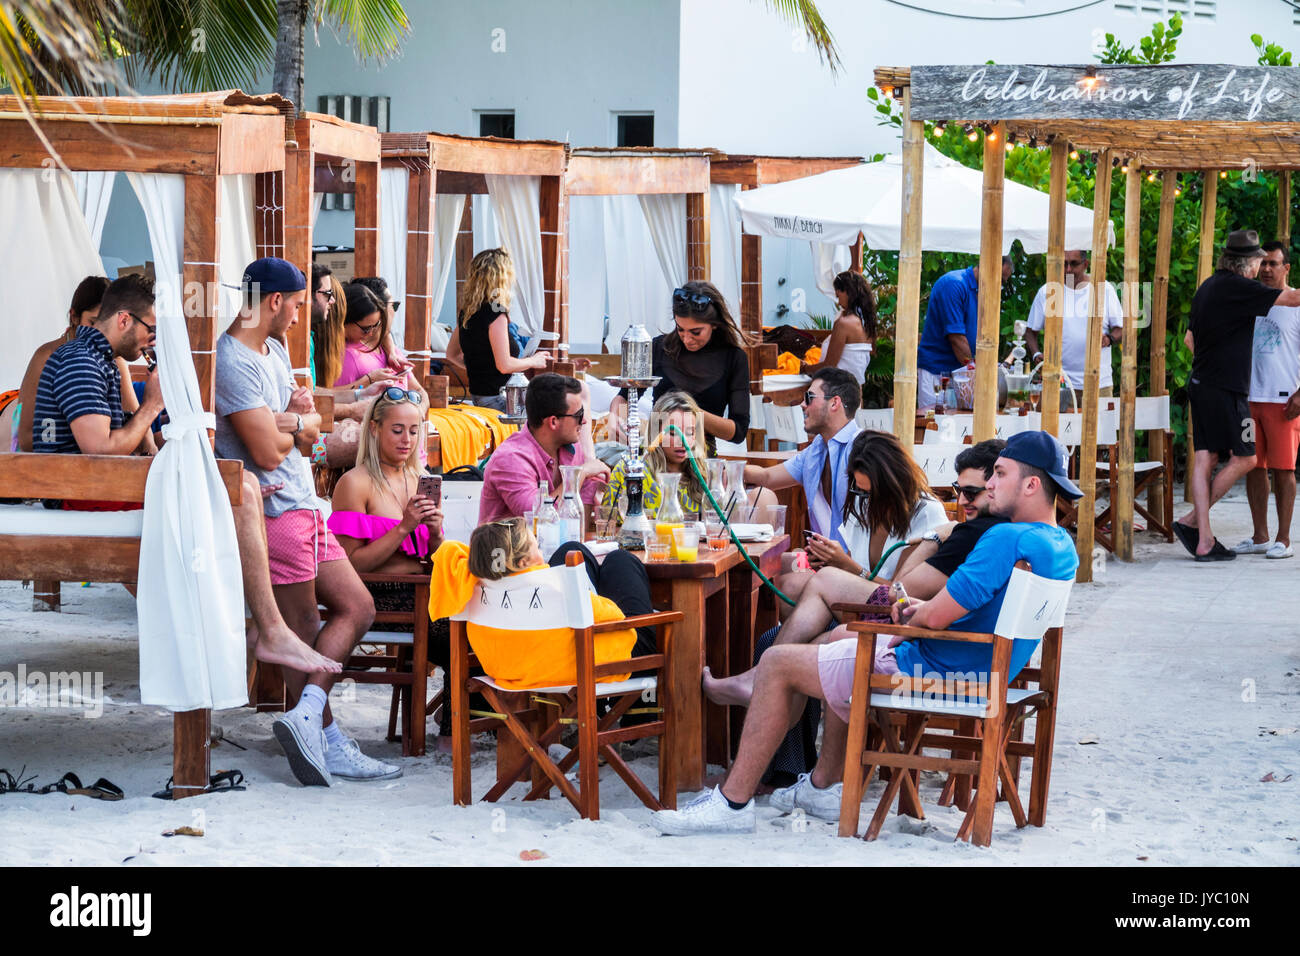 Miami Beach Florida,Nikki Beach,luxury beach club,sand,outdoor,young adults,FL170430063 Stock Photo